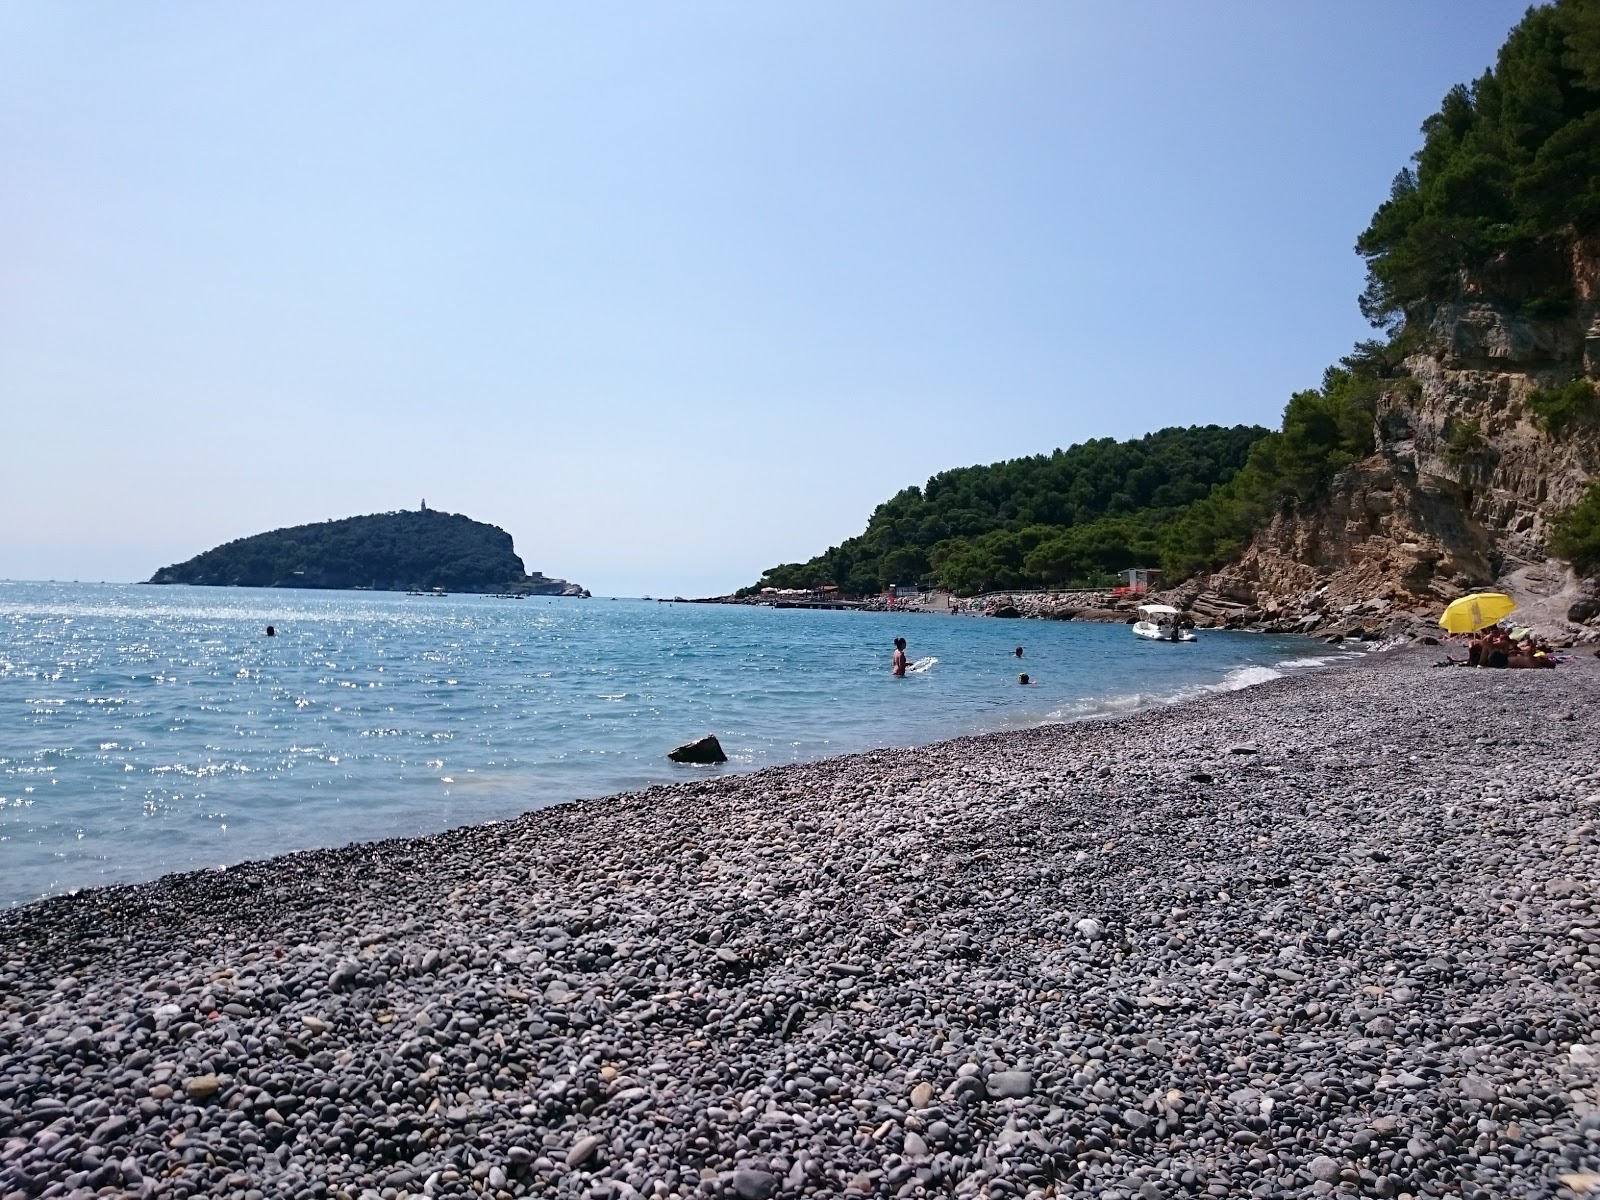 Foto von Spiaggia dei Gabbiani mit grauer kies Oberfläche